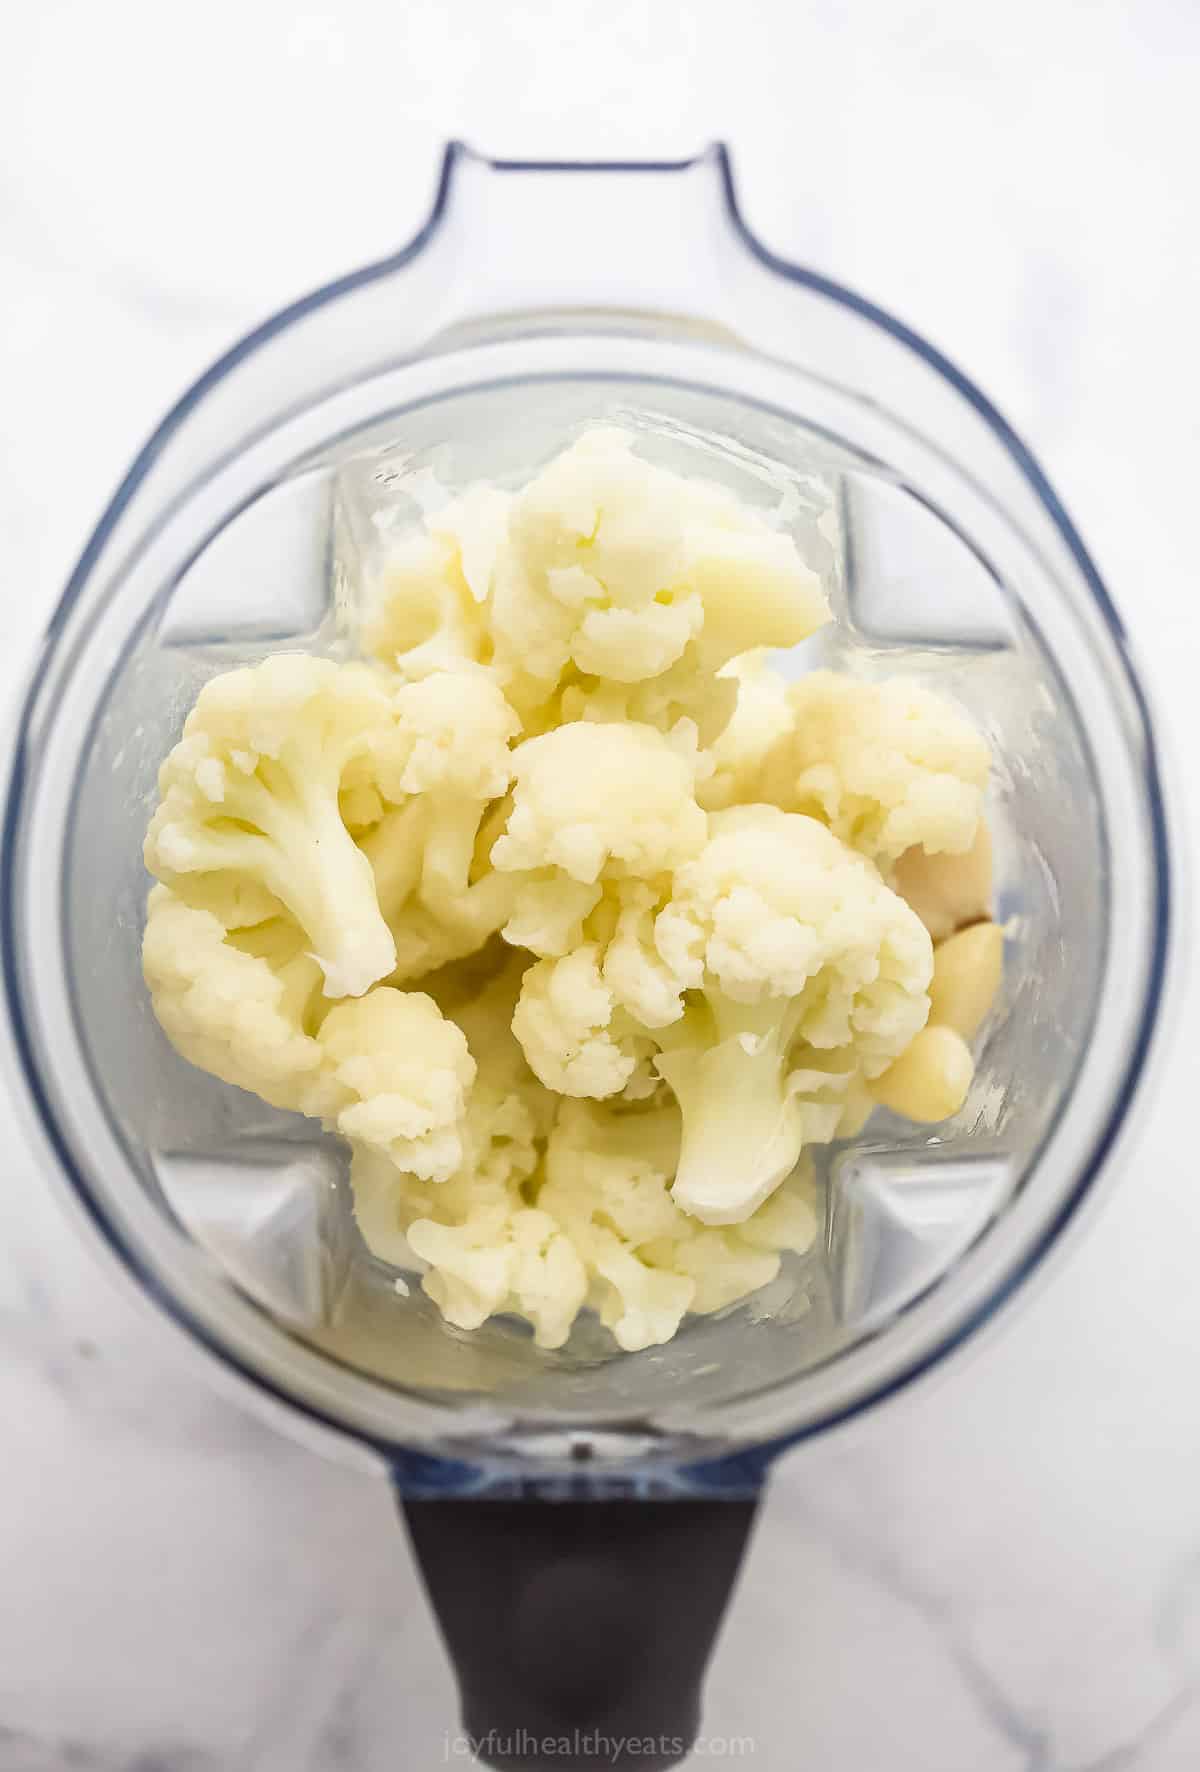 Steamed cauliflower florets inside of a food processor